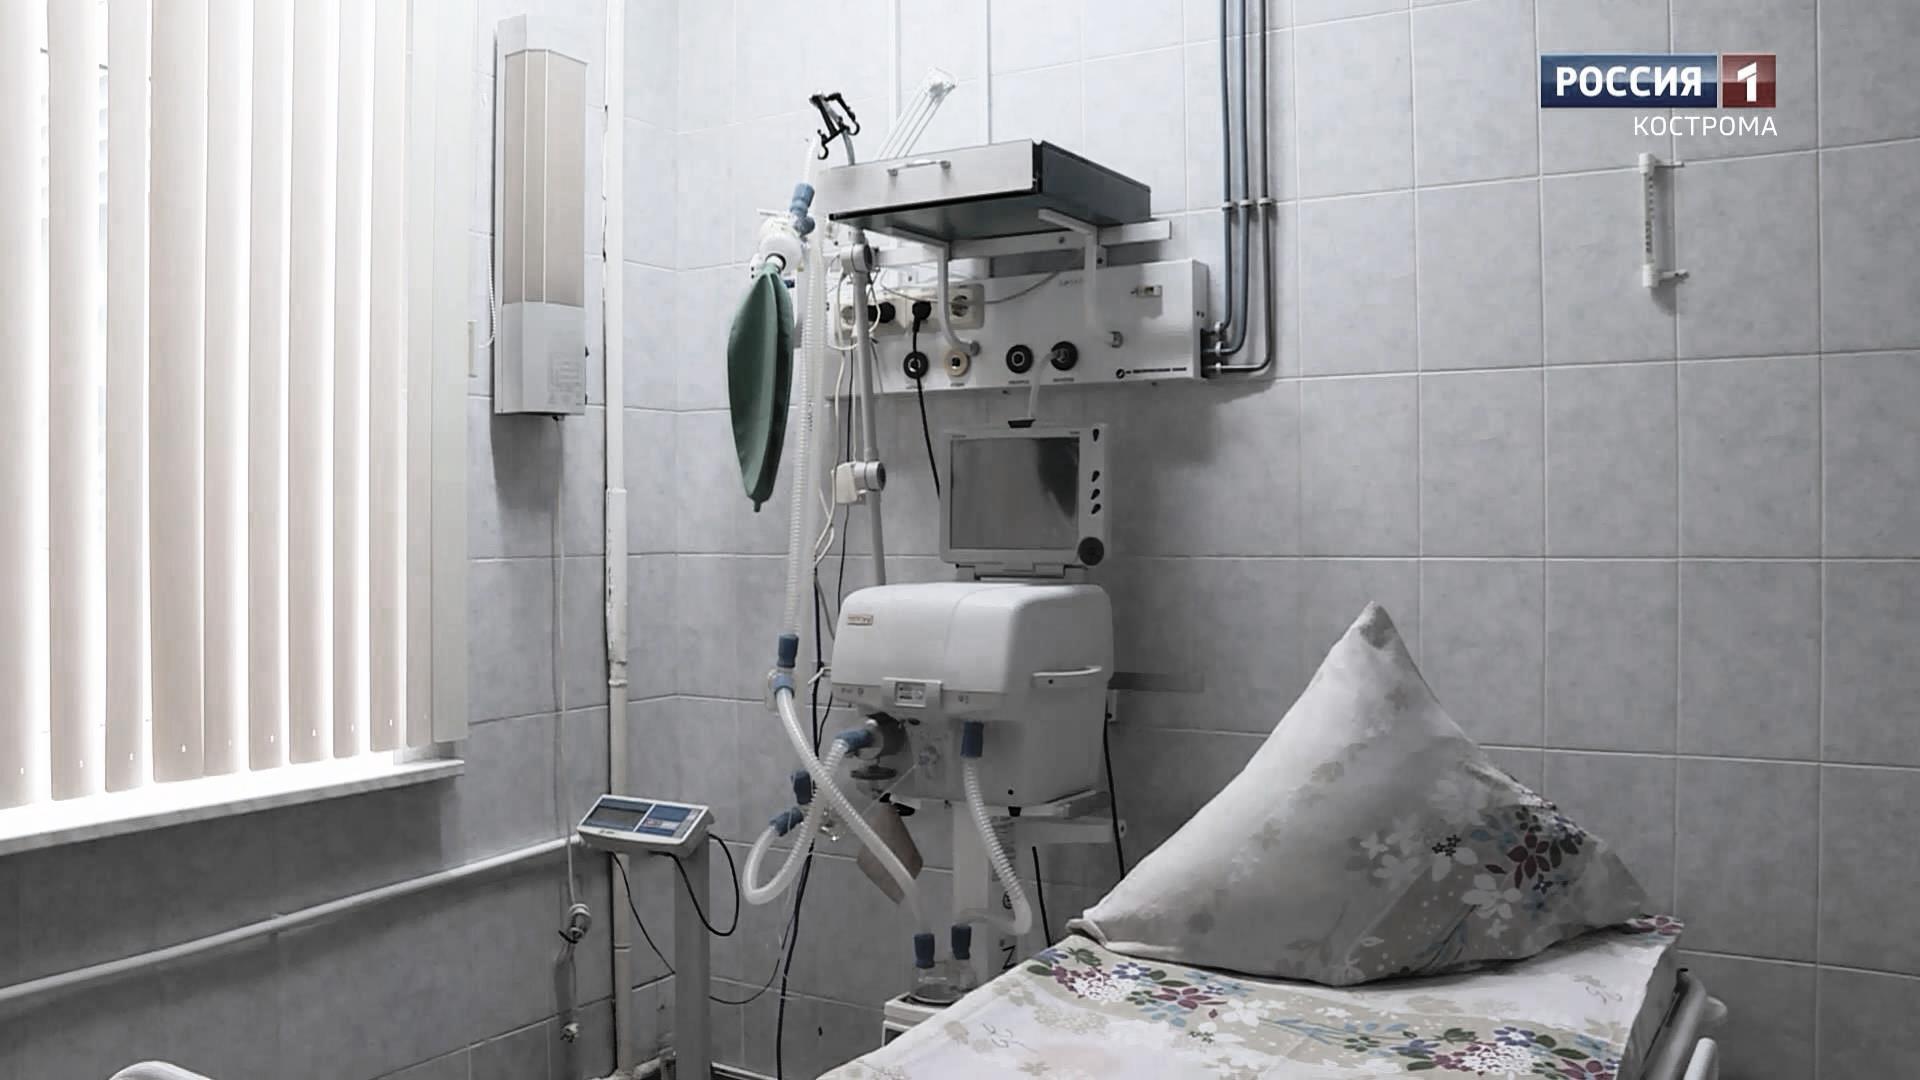 В Костроме растет ежедневное количество смертей от коронавируса